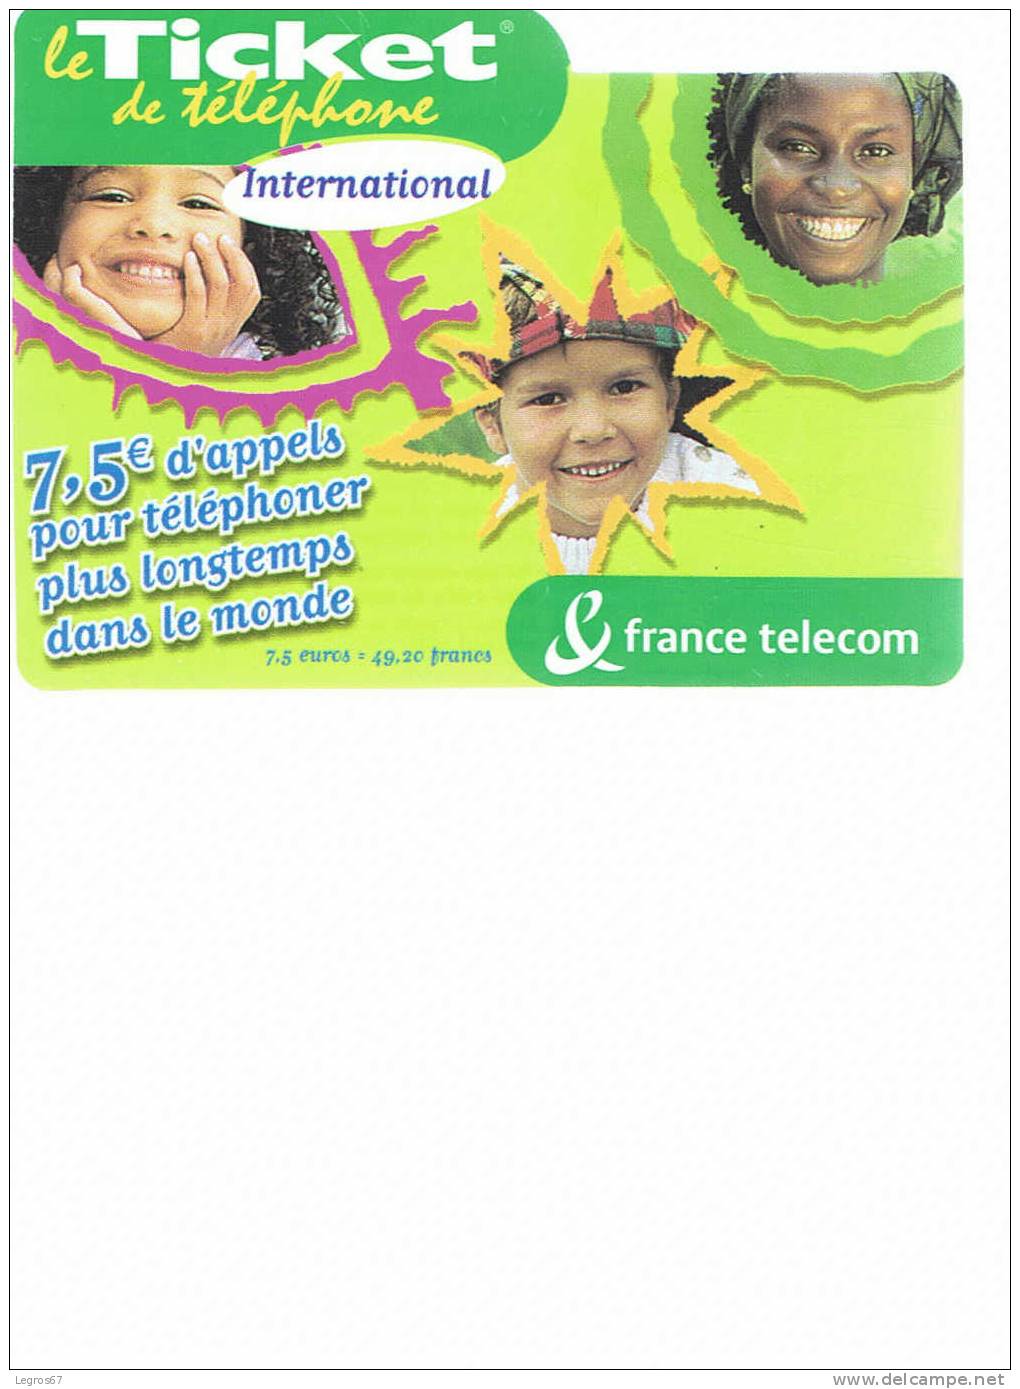 TICKET TELEPHONE 7.5 € - 31/08/2004 - Billetes FT